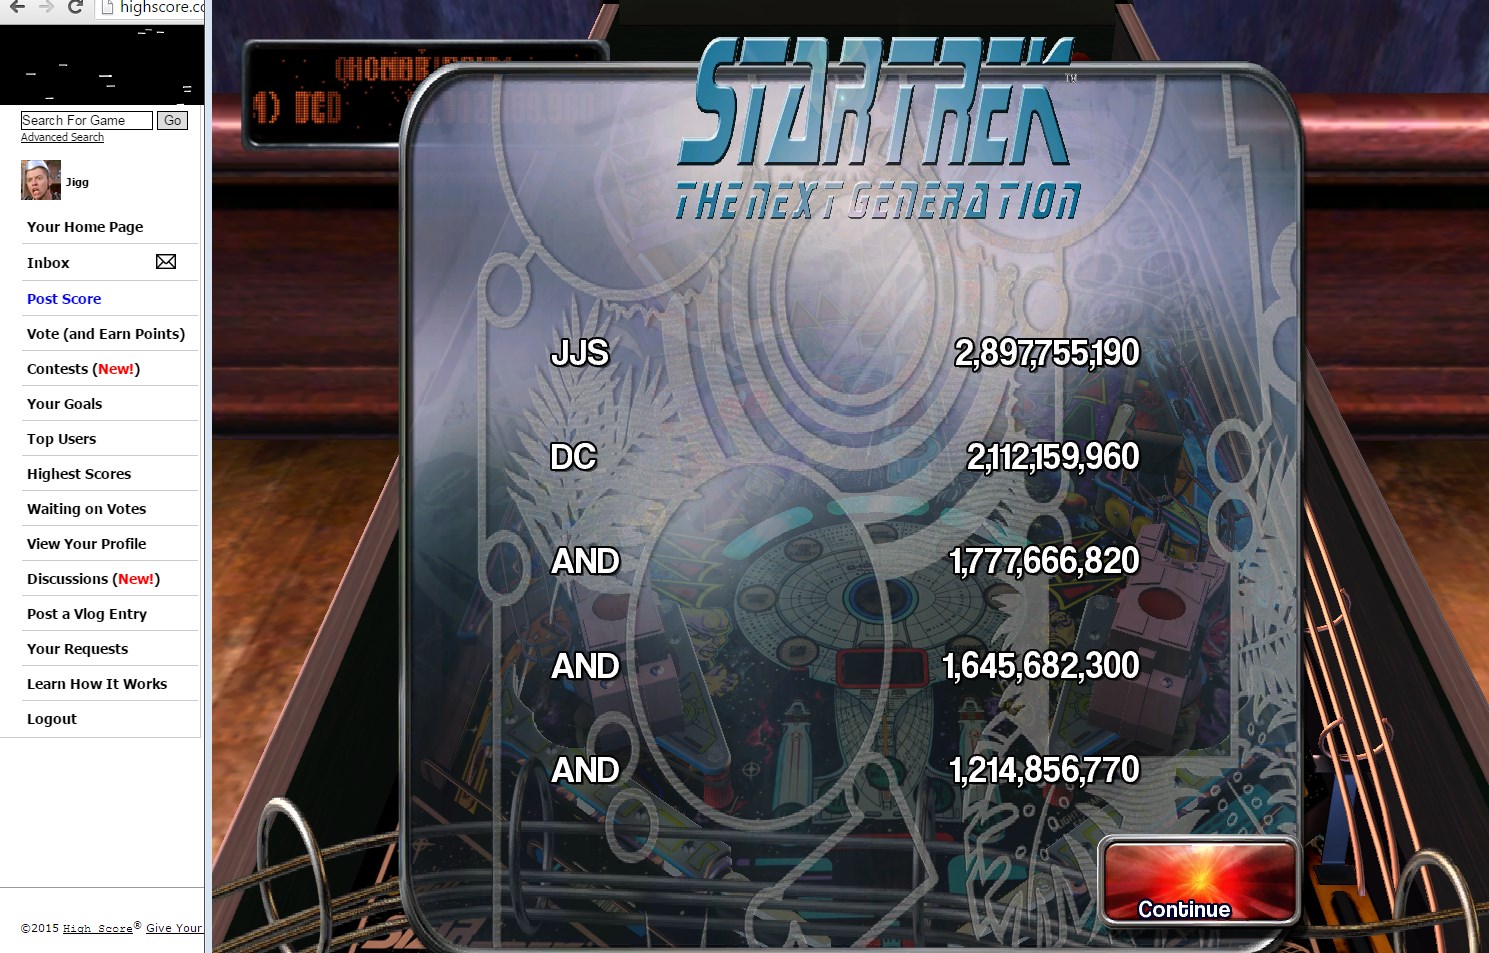 Pinball Arcade: Star Trek: The Next Generation 1,777,666,820 points